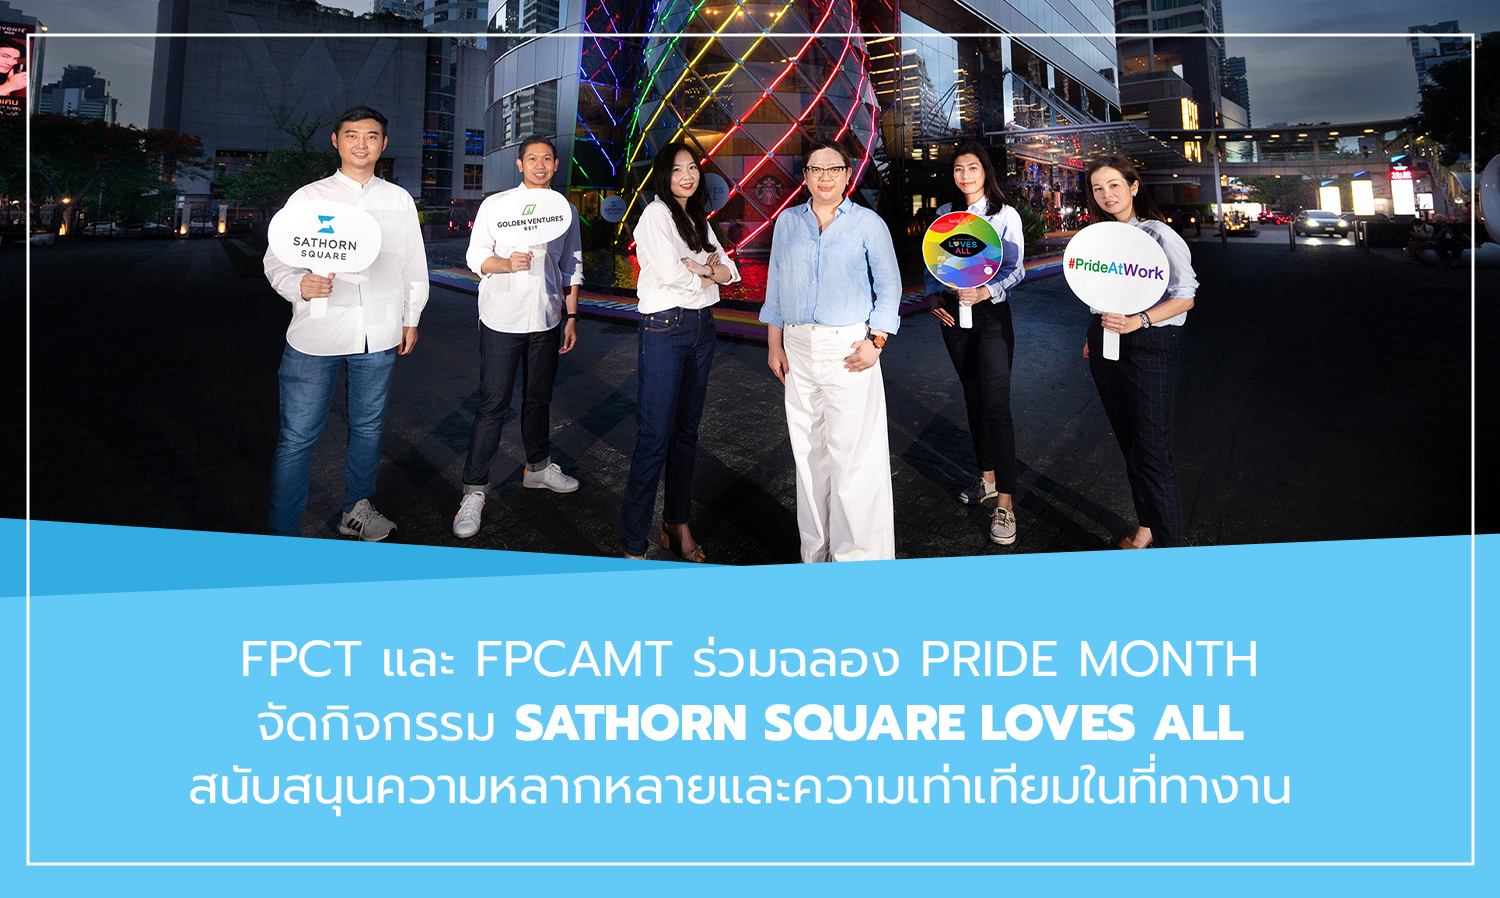 FPCT และ FPCAMT ร่วมฉลอง Pride Month จัดกิจกรรม Sathorn Square Loves All สนับสนุนความหลากหลายและความเท่าเทียมในที่ทางาน 